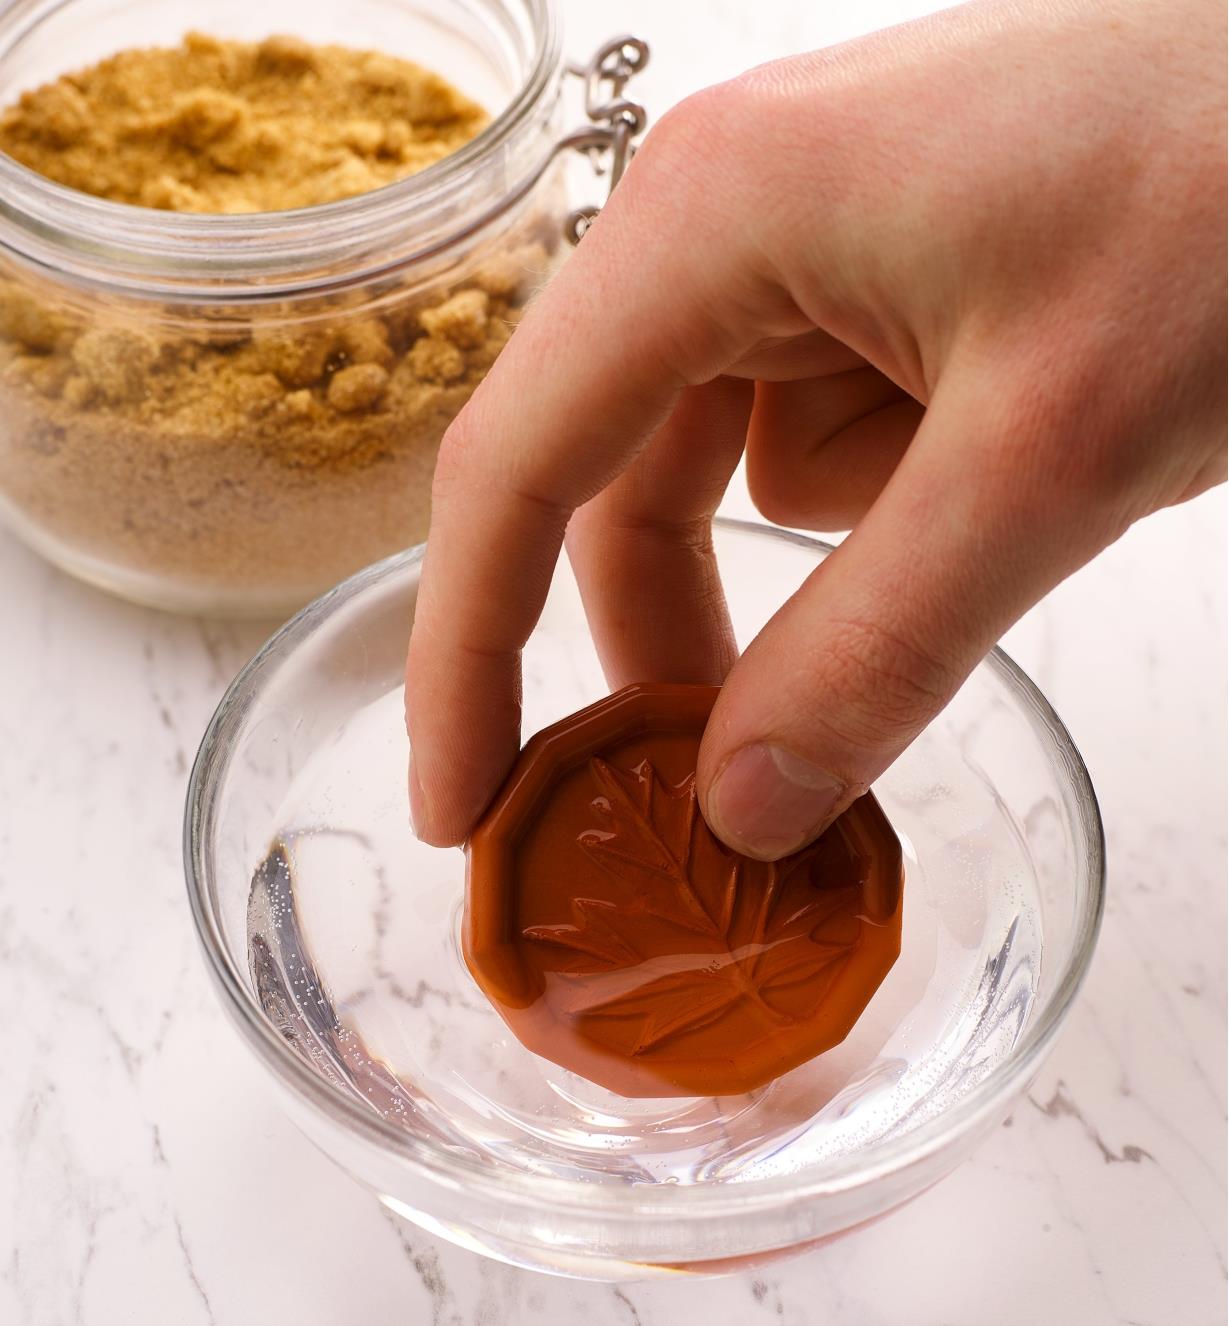 Placing a brown sugar saver in water to soak